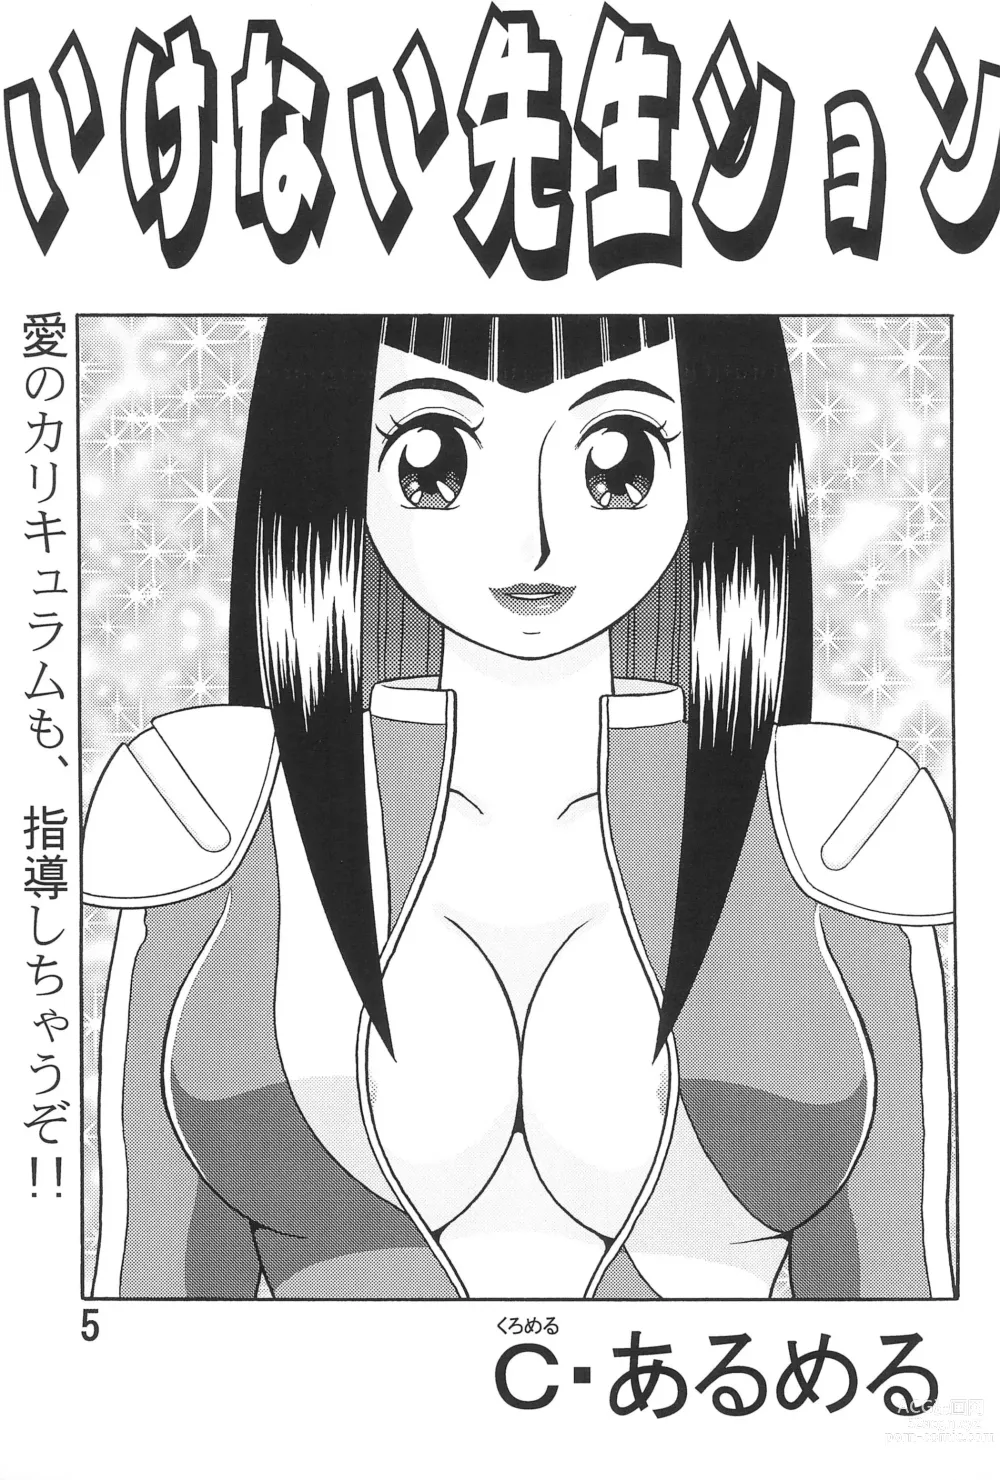 Page 7 of doujinshi 5 Nen 1 Kumi Mahougumi 2